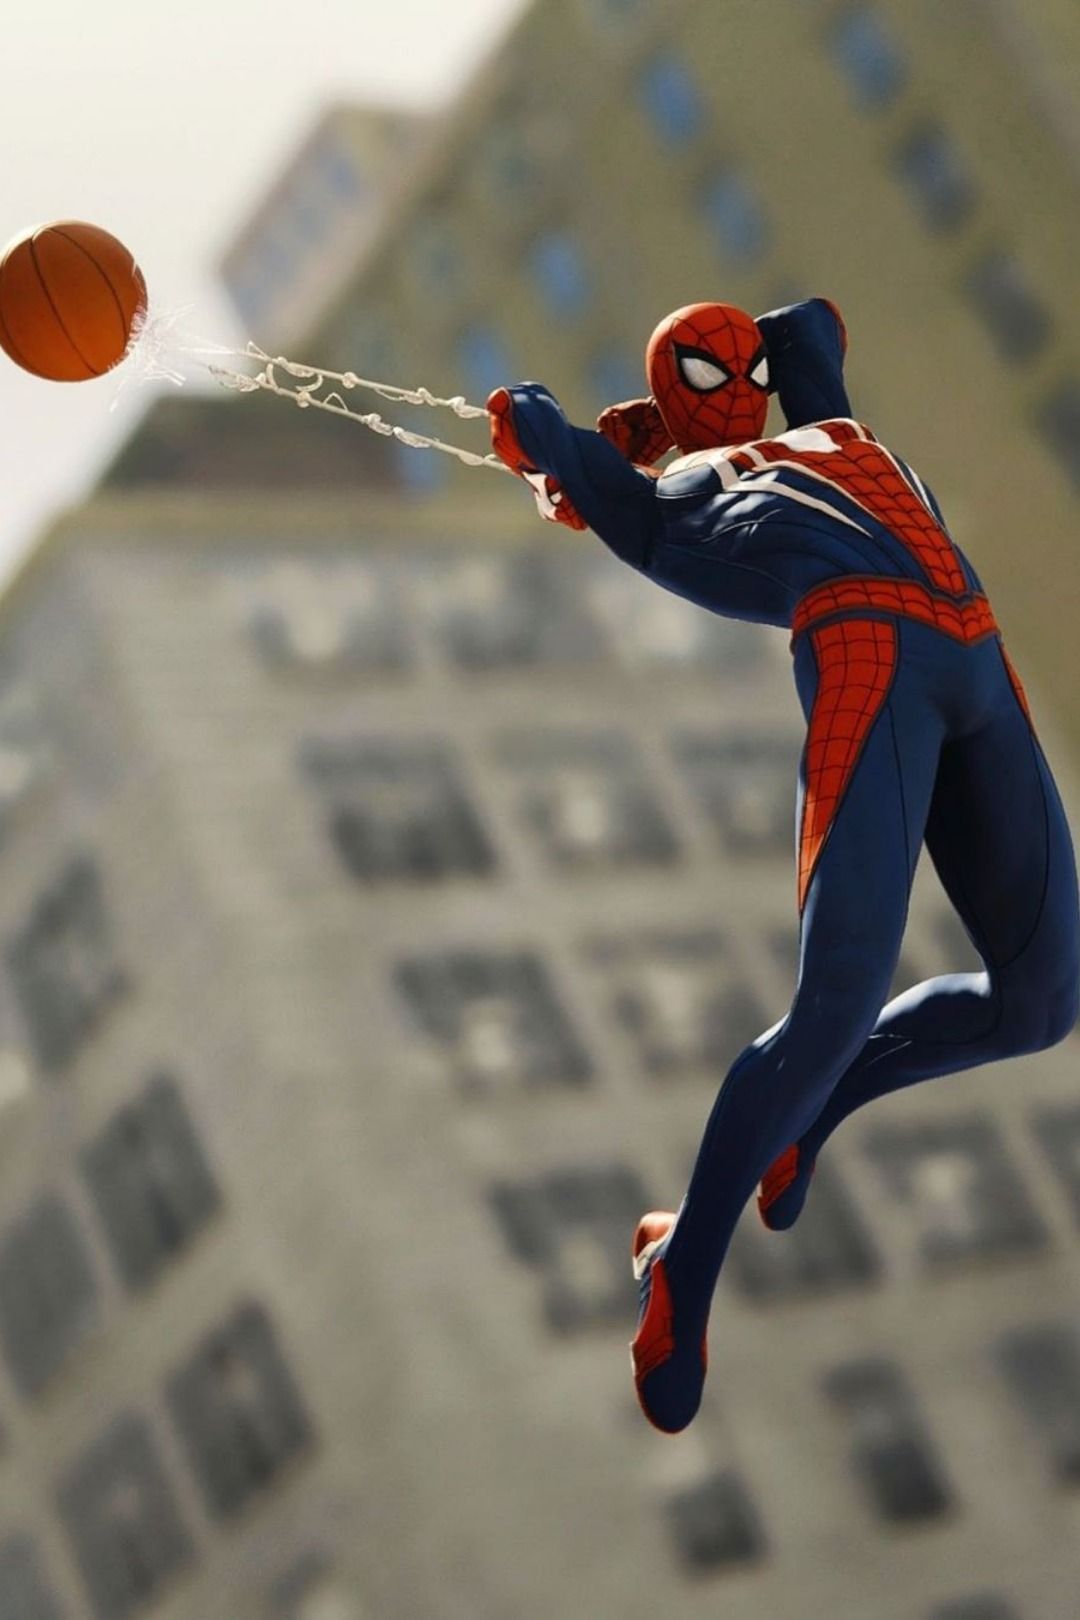 Spiderman Basketball #ps4. Black spiderman, Spiderman, Spider man ps4 suit